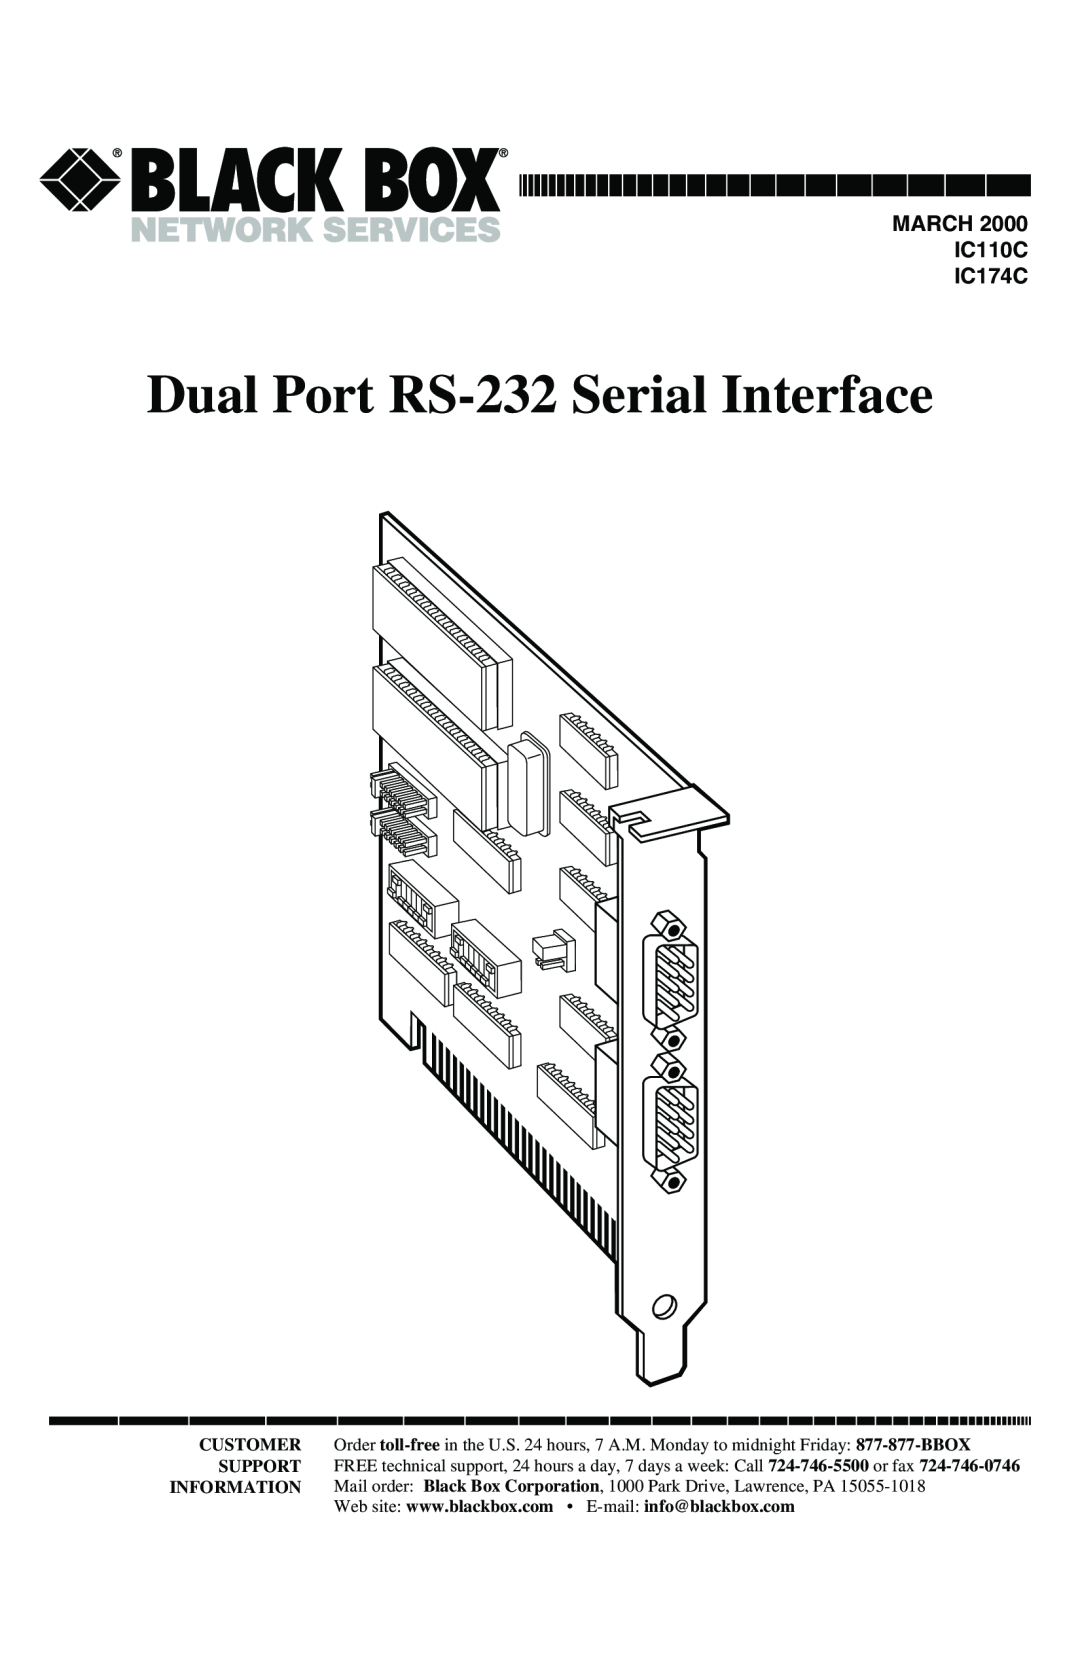 Black Box manual Dual Port RS-232 Serial Interface, MARCH IC110C IC174C 